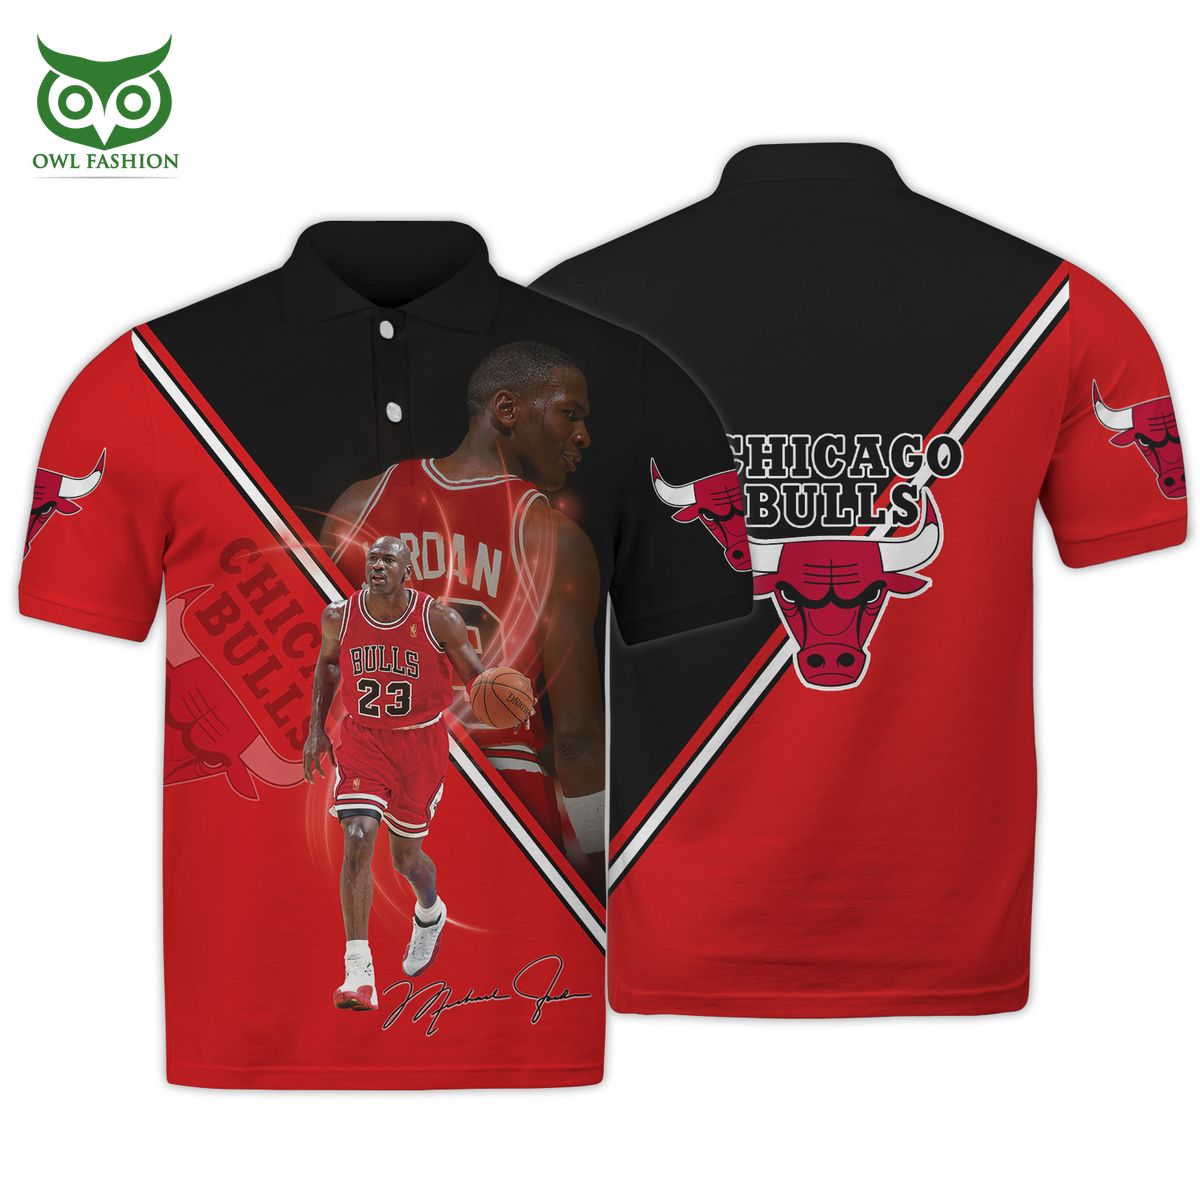 23 jordan jersey number chicago bulls simple cool shirt | Graphic T-Shirt  Dress